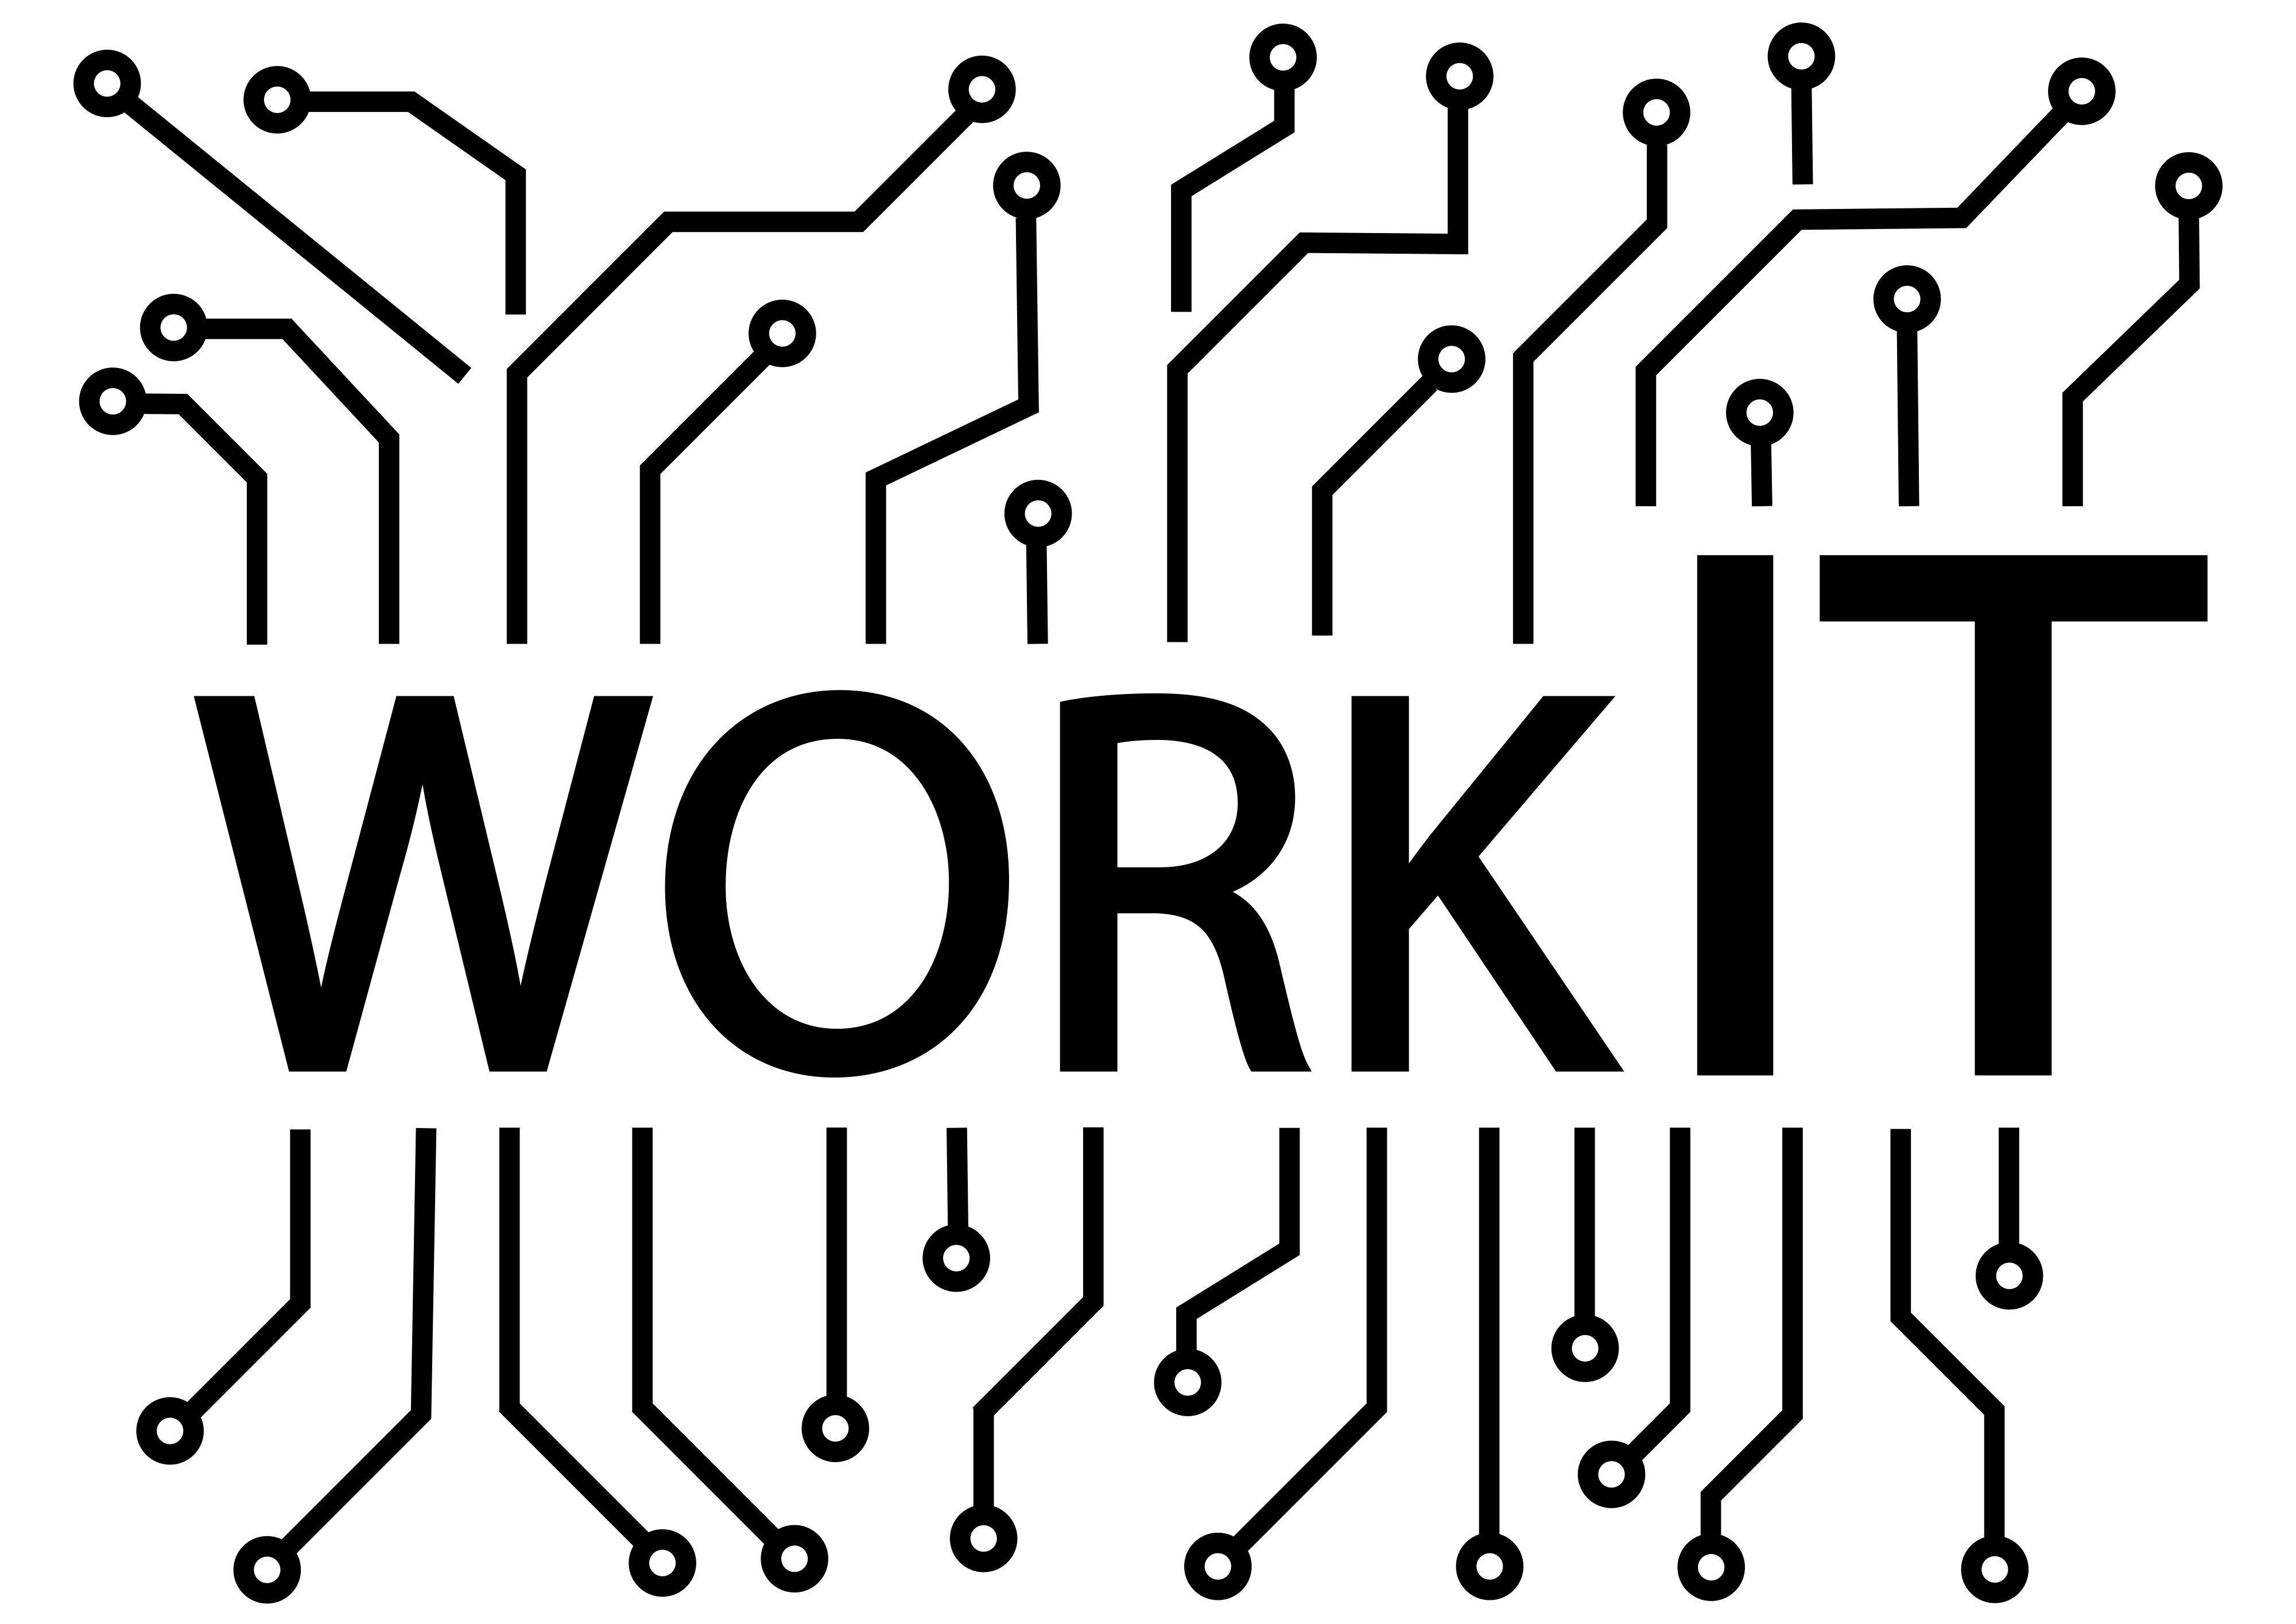 WorkIT logo